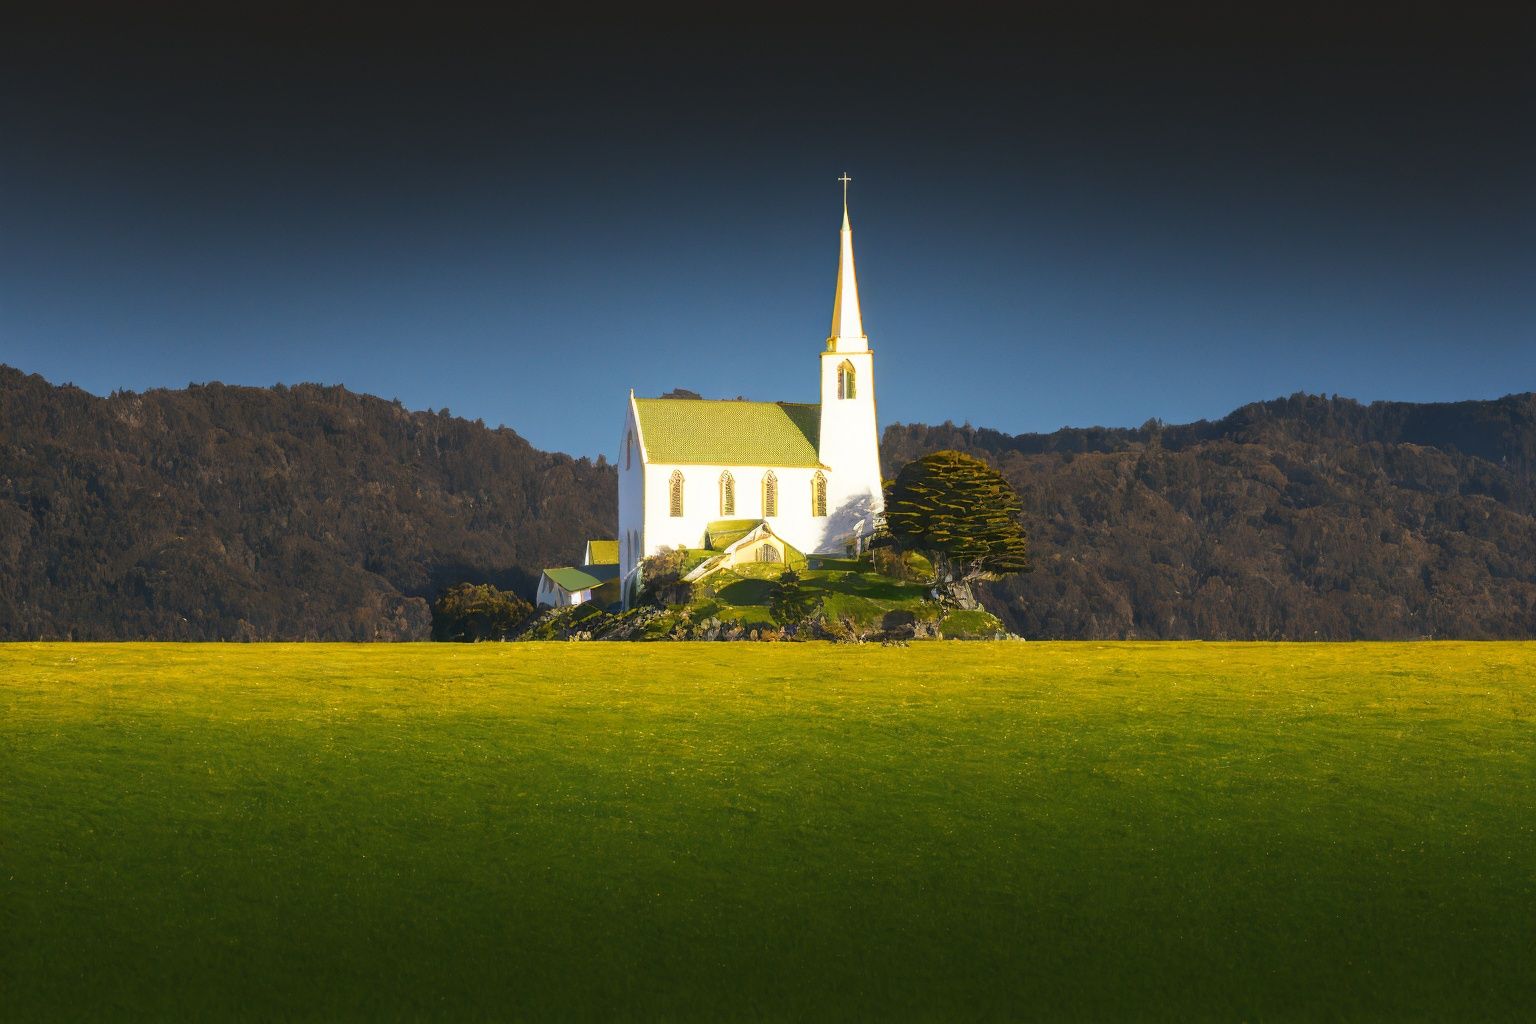 Stewart Island housing and church in New Zealand, 128k, DSLR, Kodak, octane render, masterpiece, best photography, volumetric lighting, ultra sharp, complex_background 